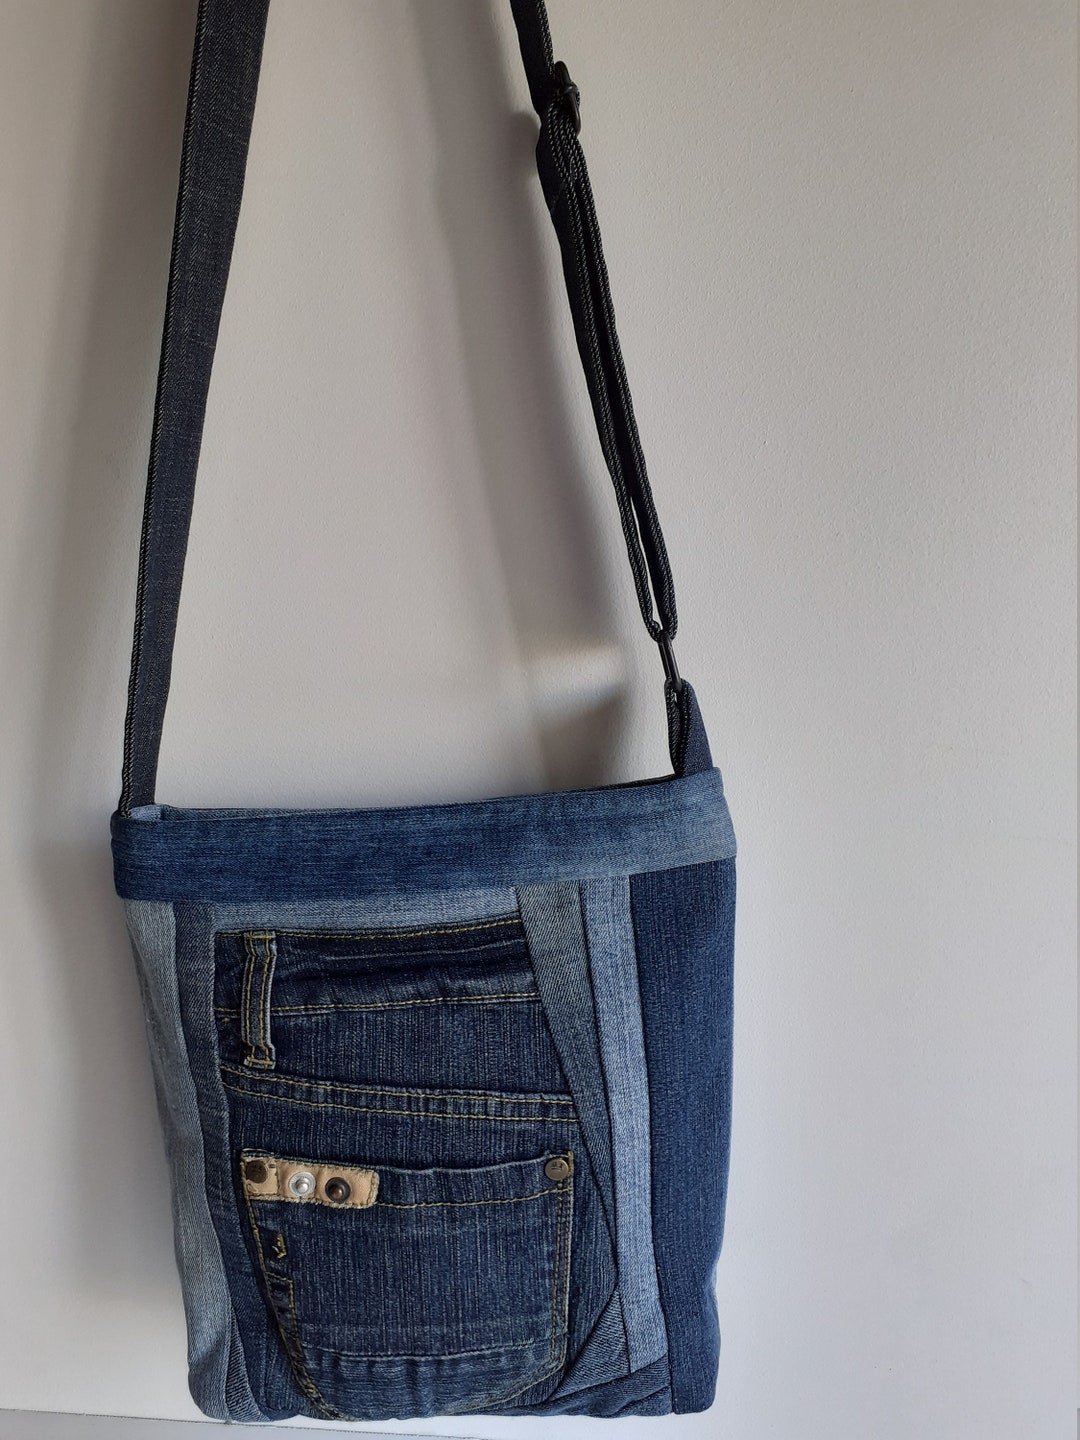 Cross Body Bag Denim Blue Tote Bag Bag Purse Patchwork Handbag - Etsy